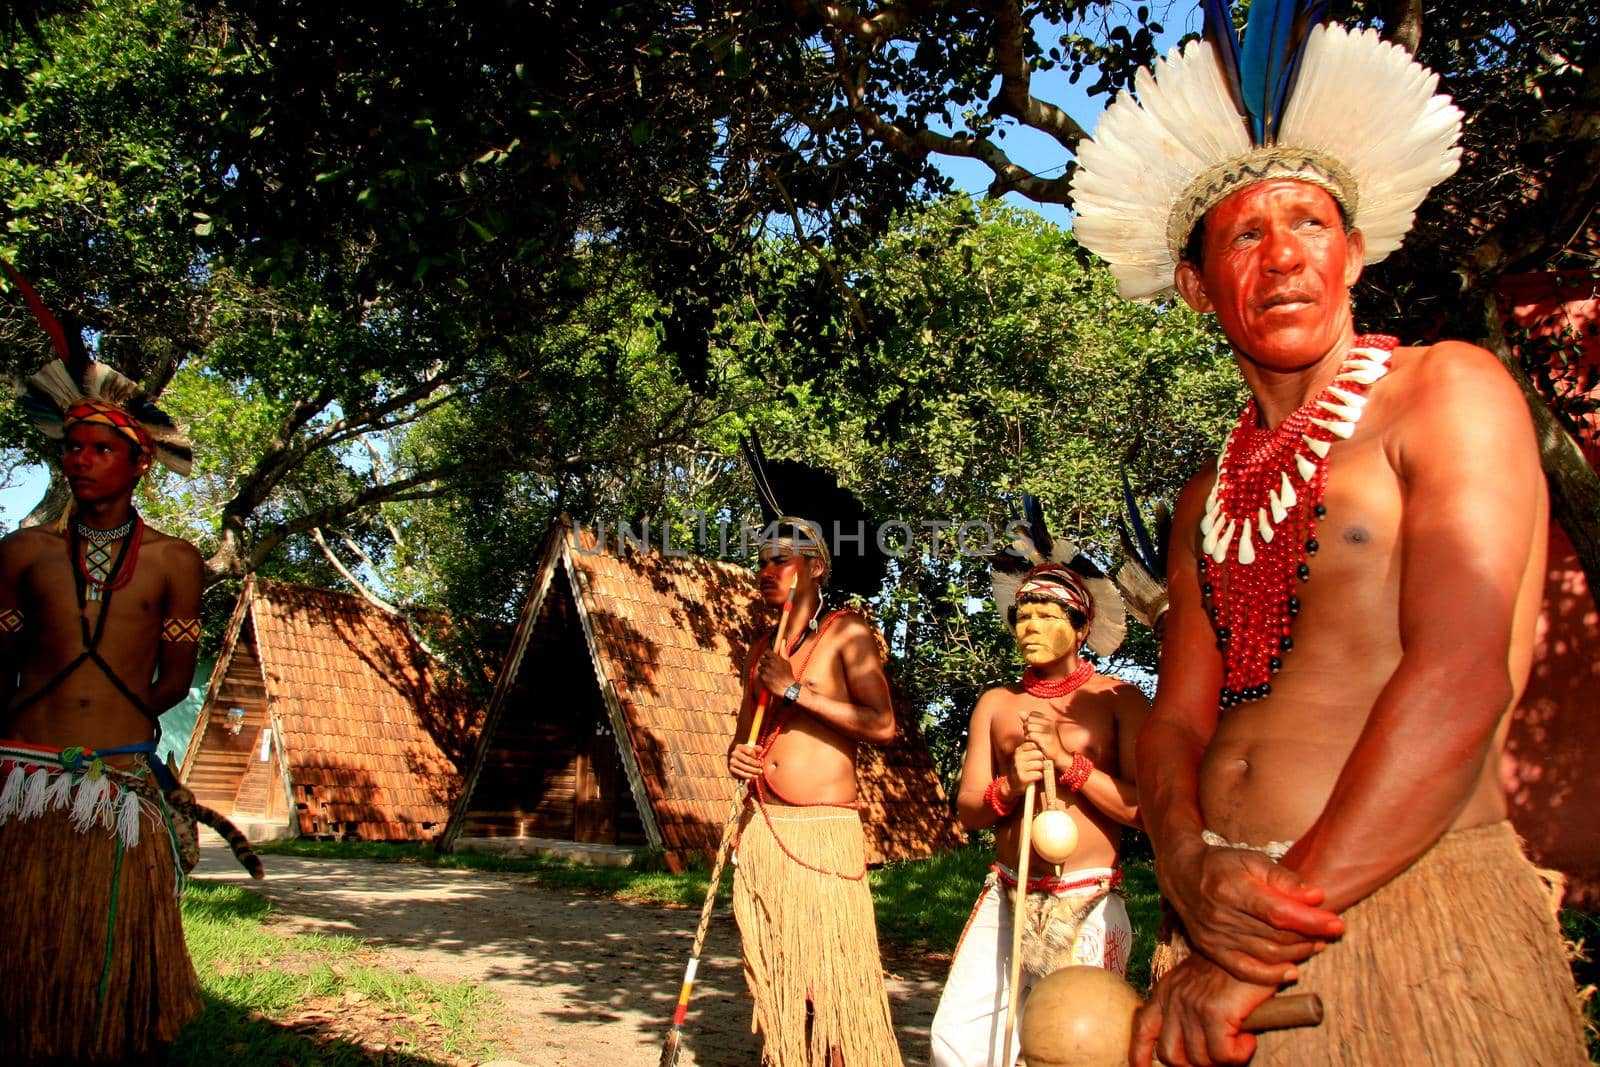 santa cruz babralia, bahia / brazil - december 26, 2008: Atina Pataxo Indians are seen in the Coroa Vermelha village in the municipality of Santa Cruz Cabralia.

